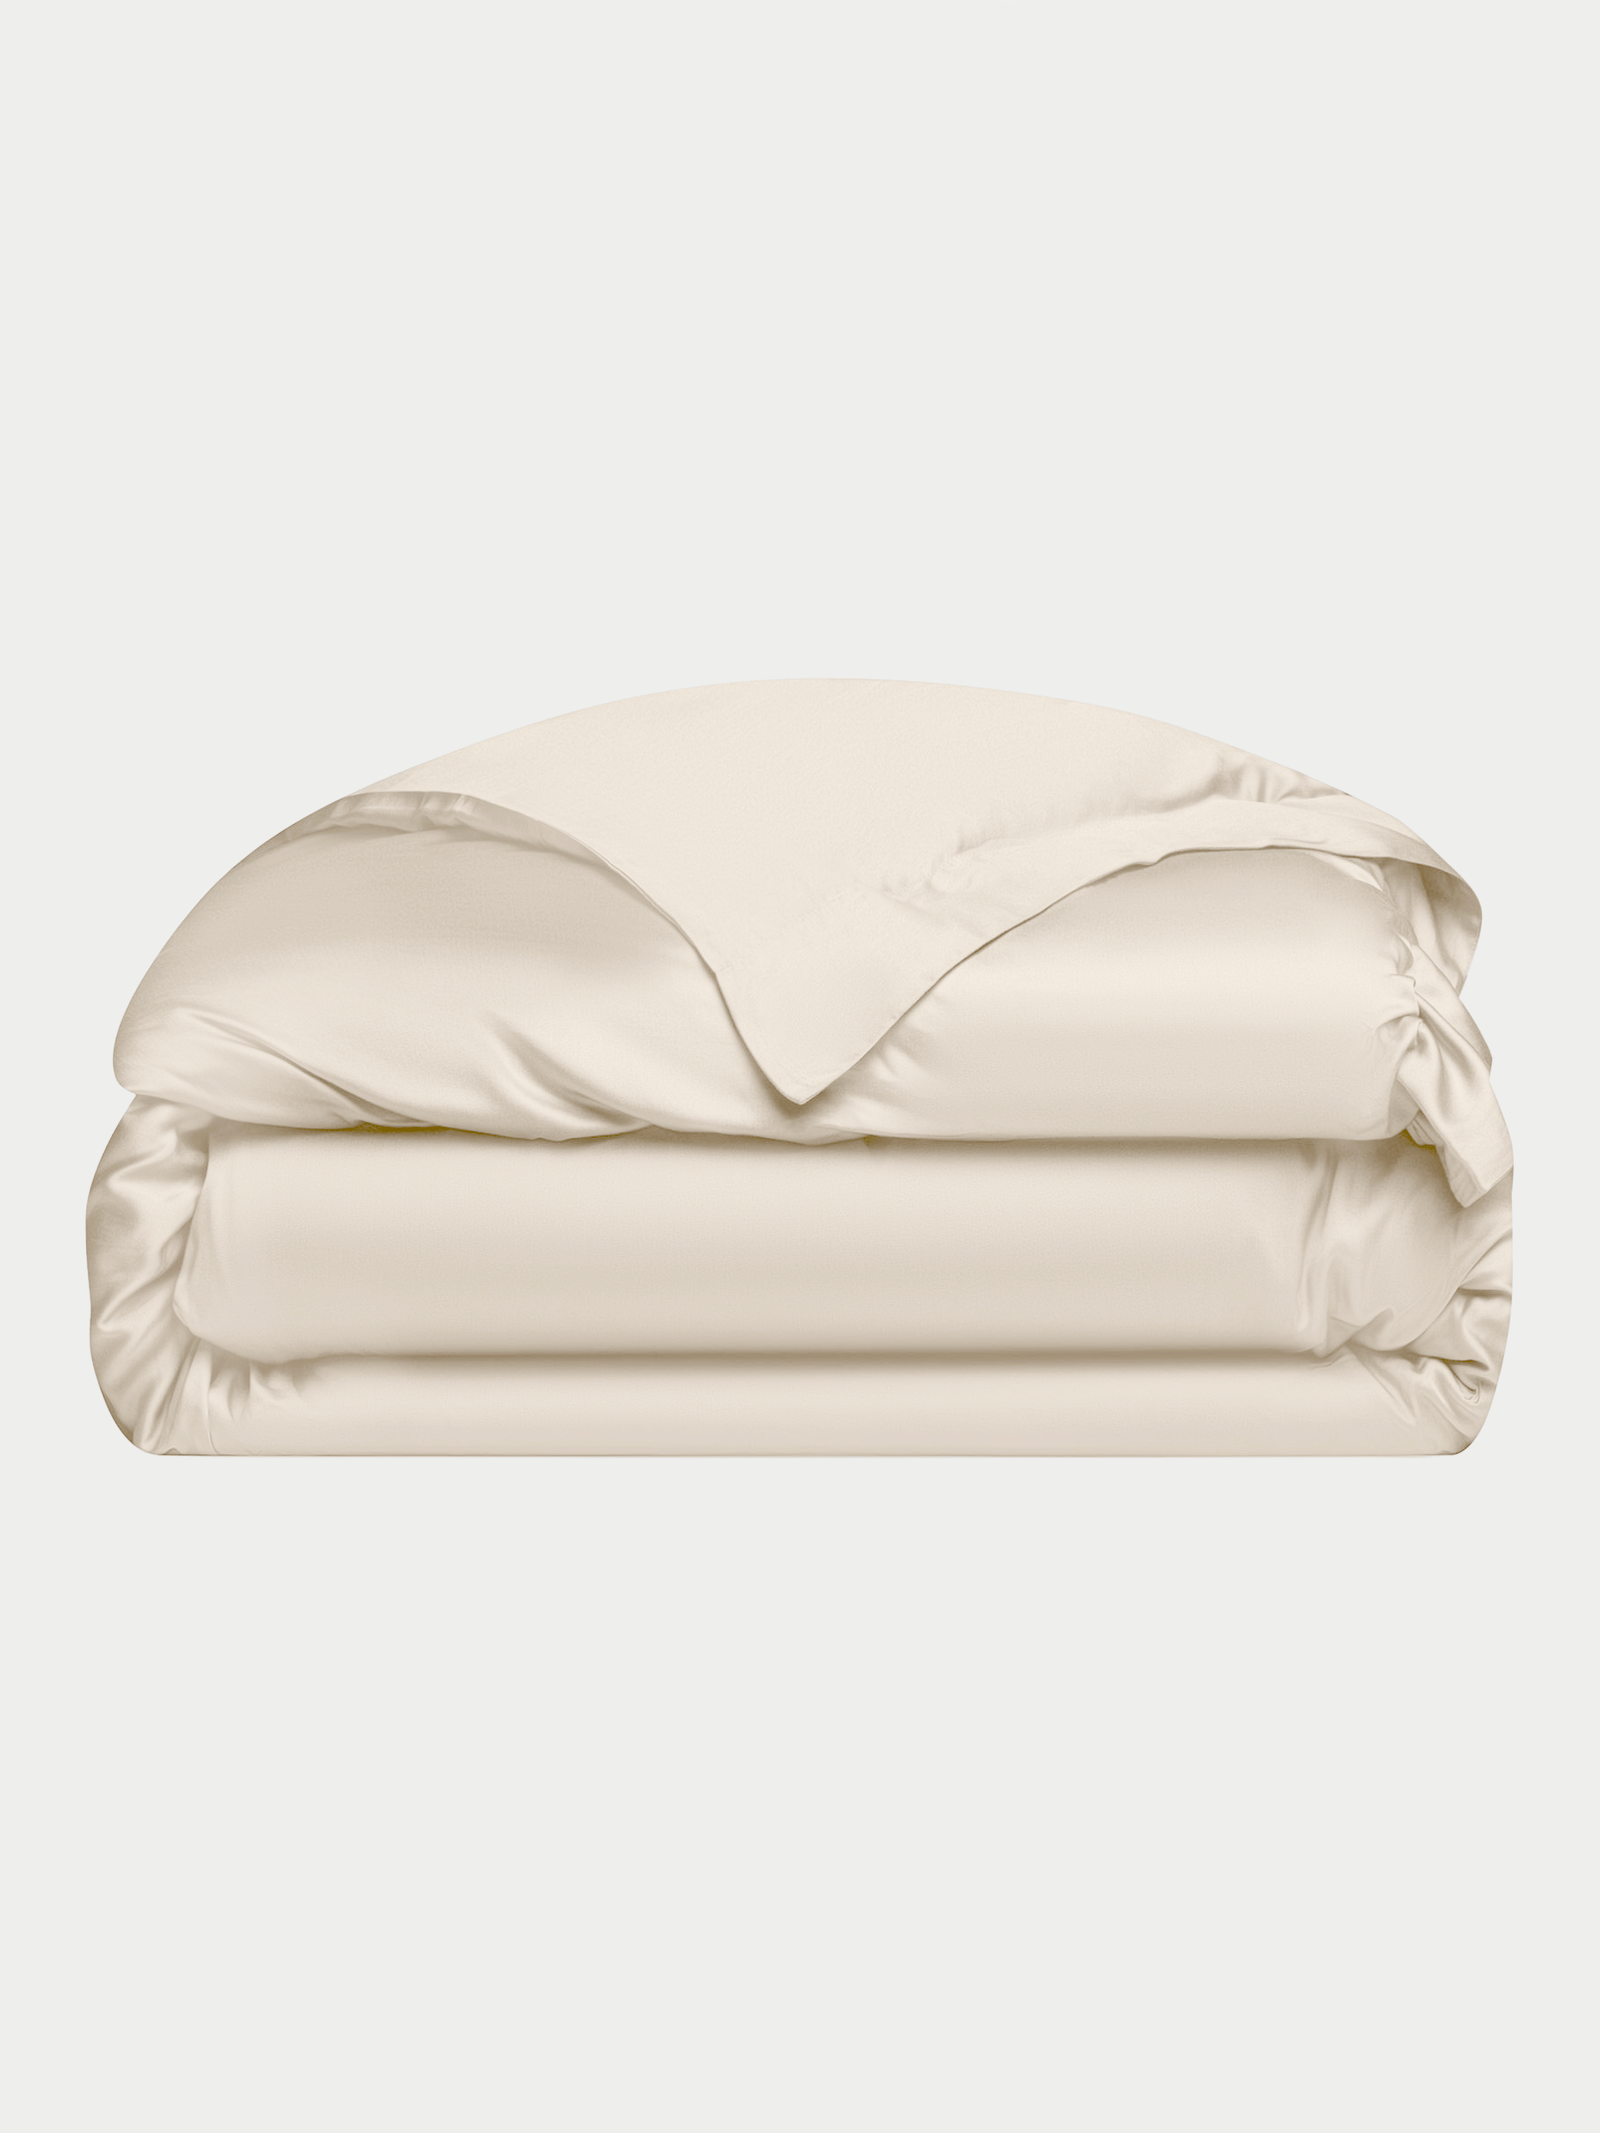 Oat duvet cover folded with white background 